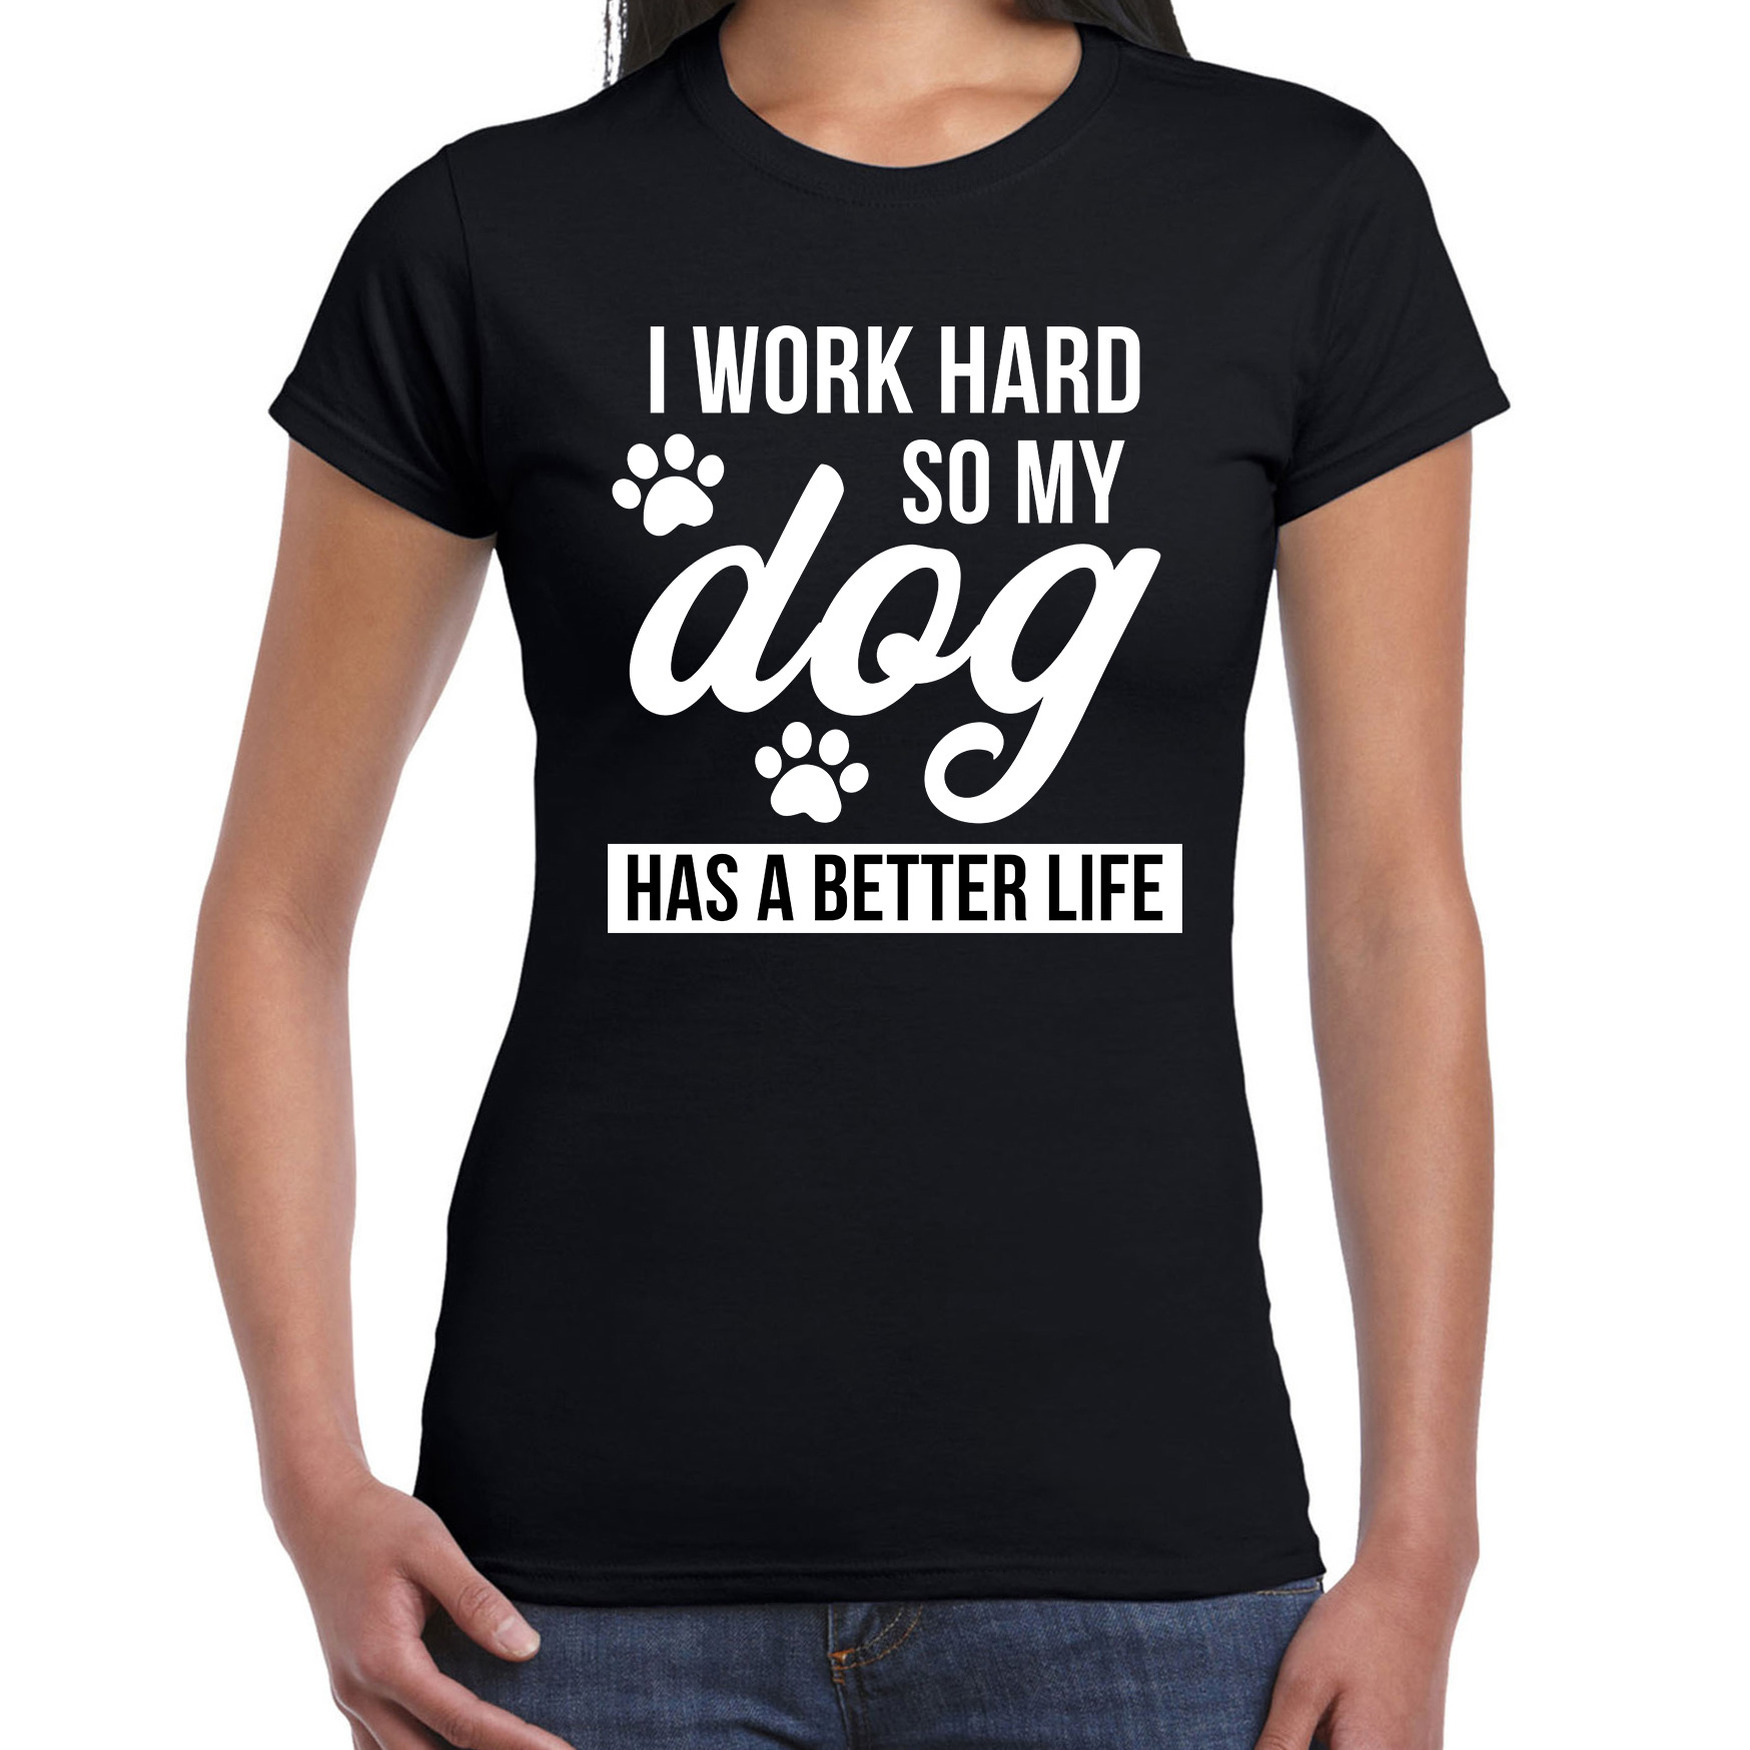 Work hard so dog has better life - Werk hard hond beter leven t-shirt zwart voor dames